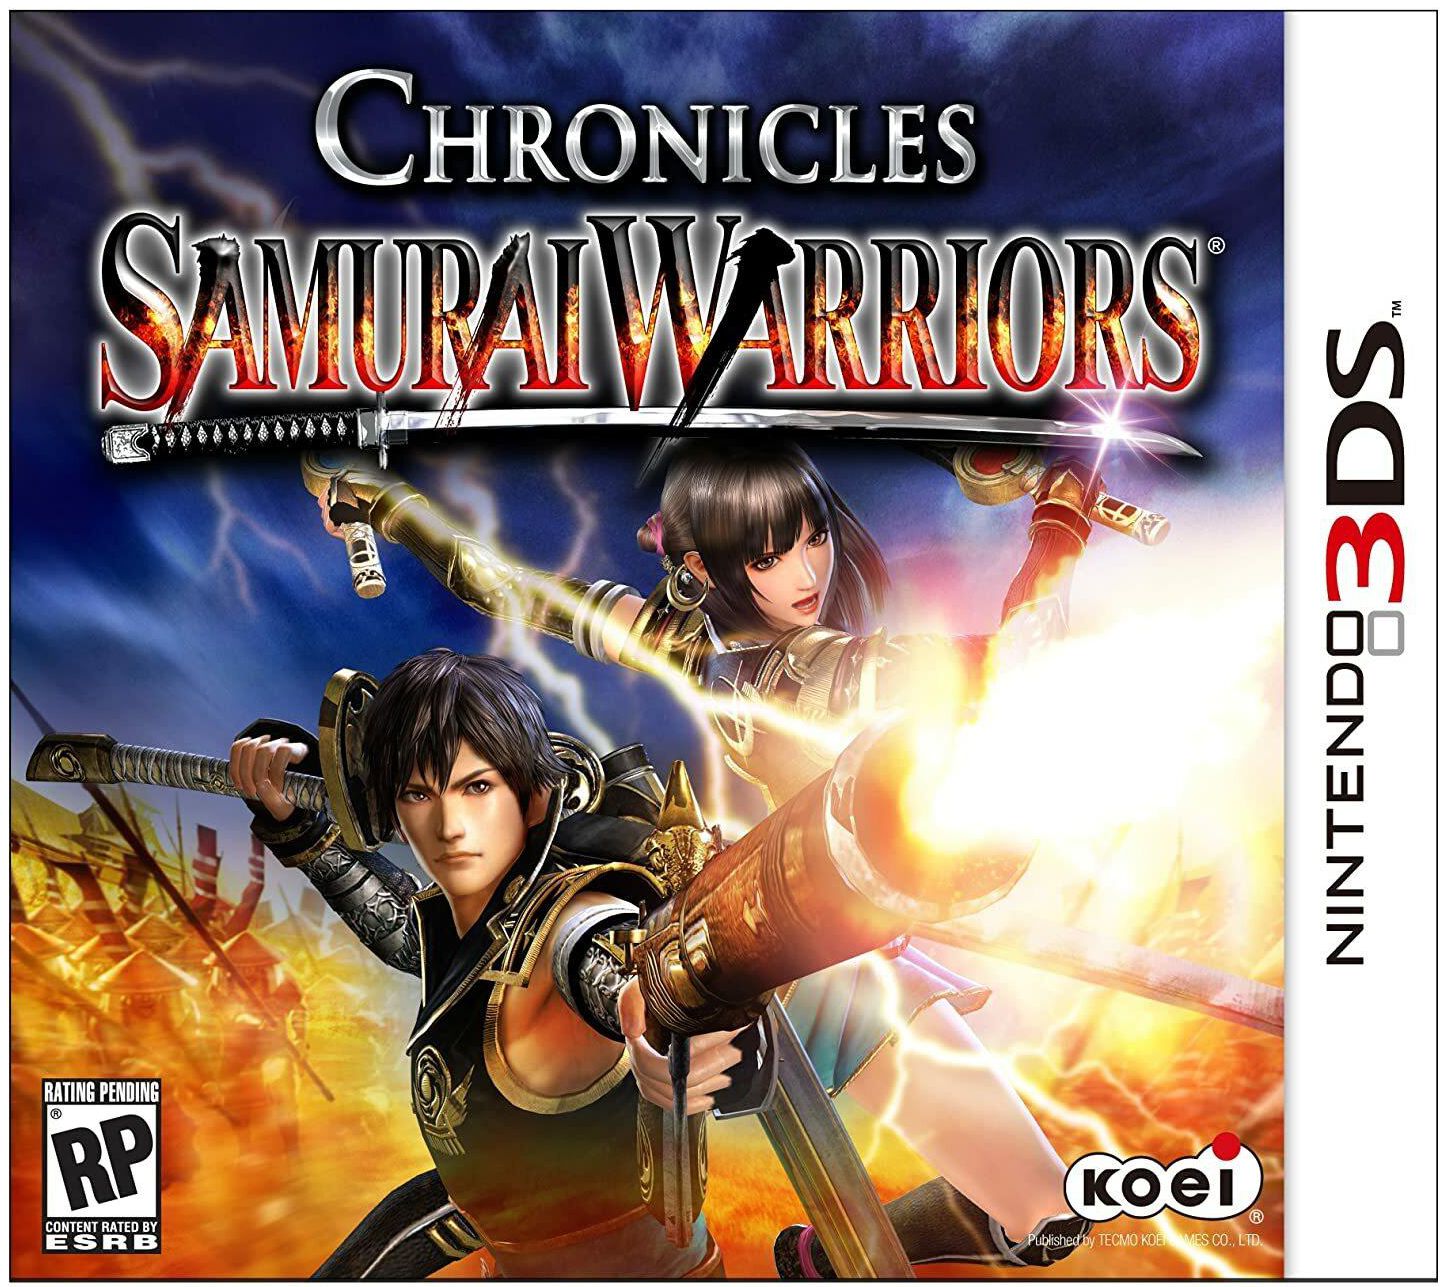 Nintendo 3DS-Samurai Warriors Chronicles Ntsc